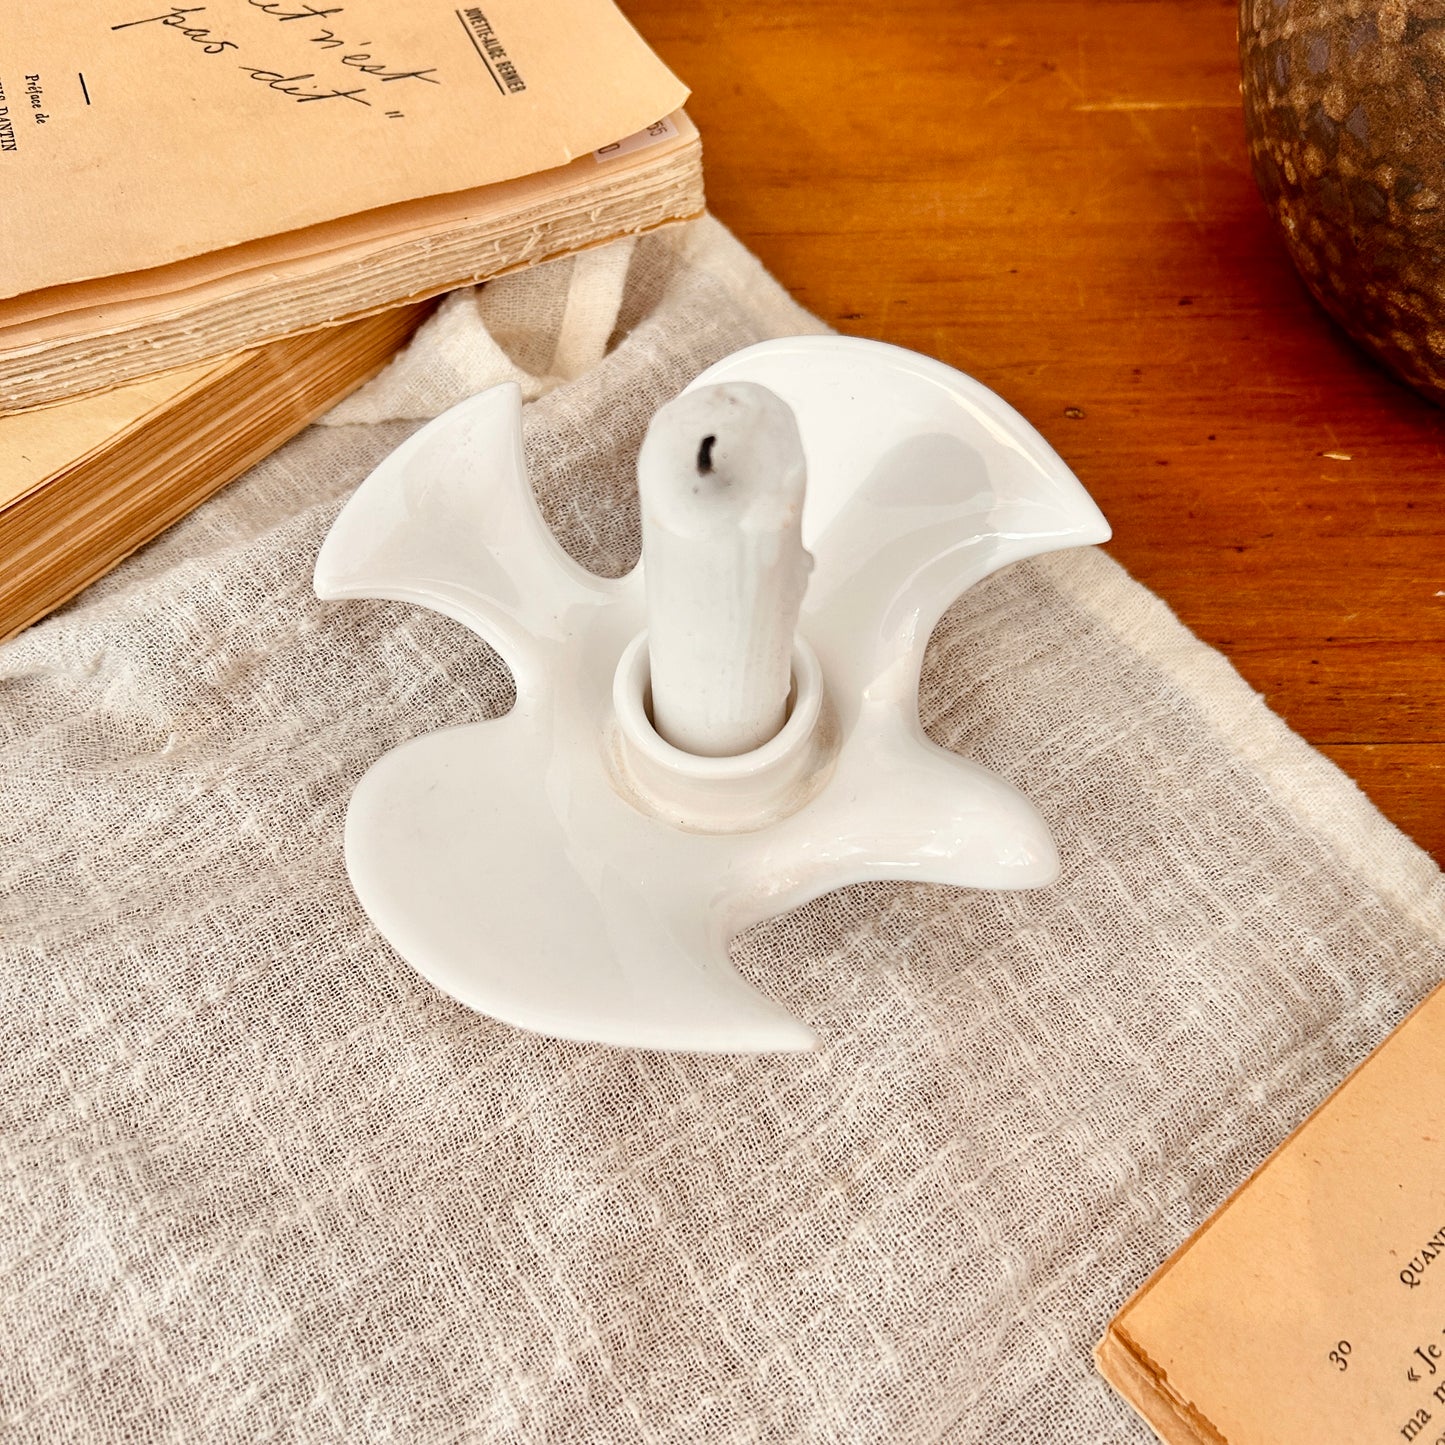 Ceramic bird candle holder